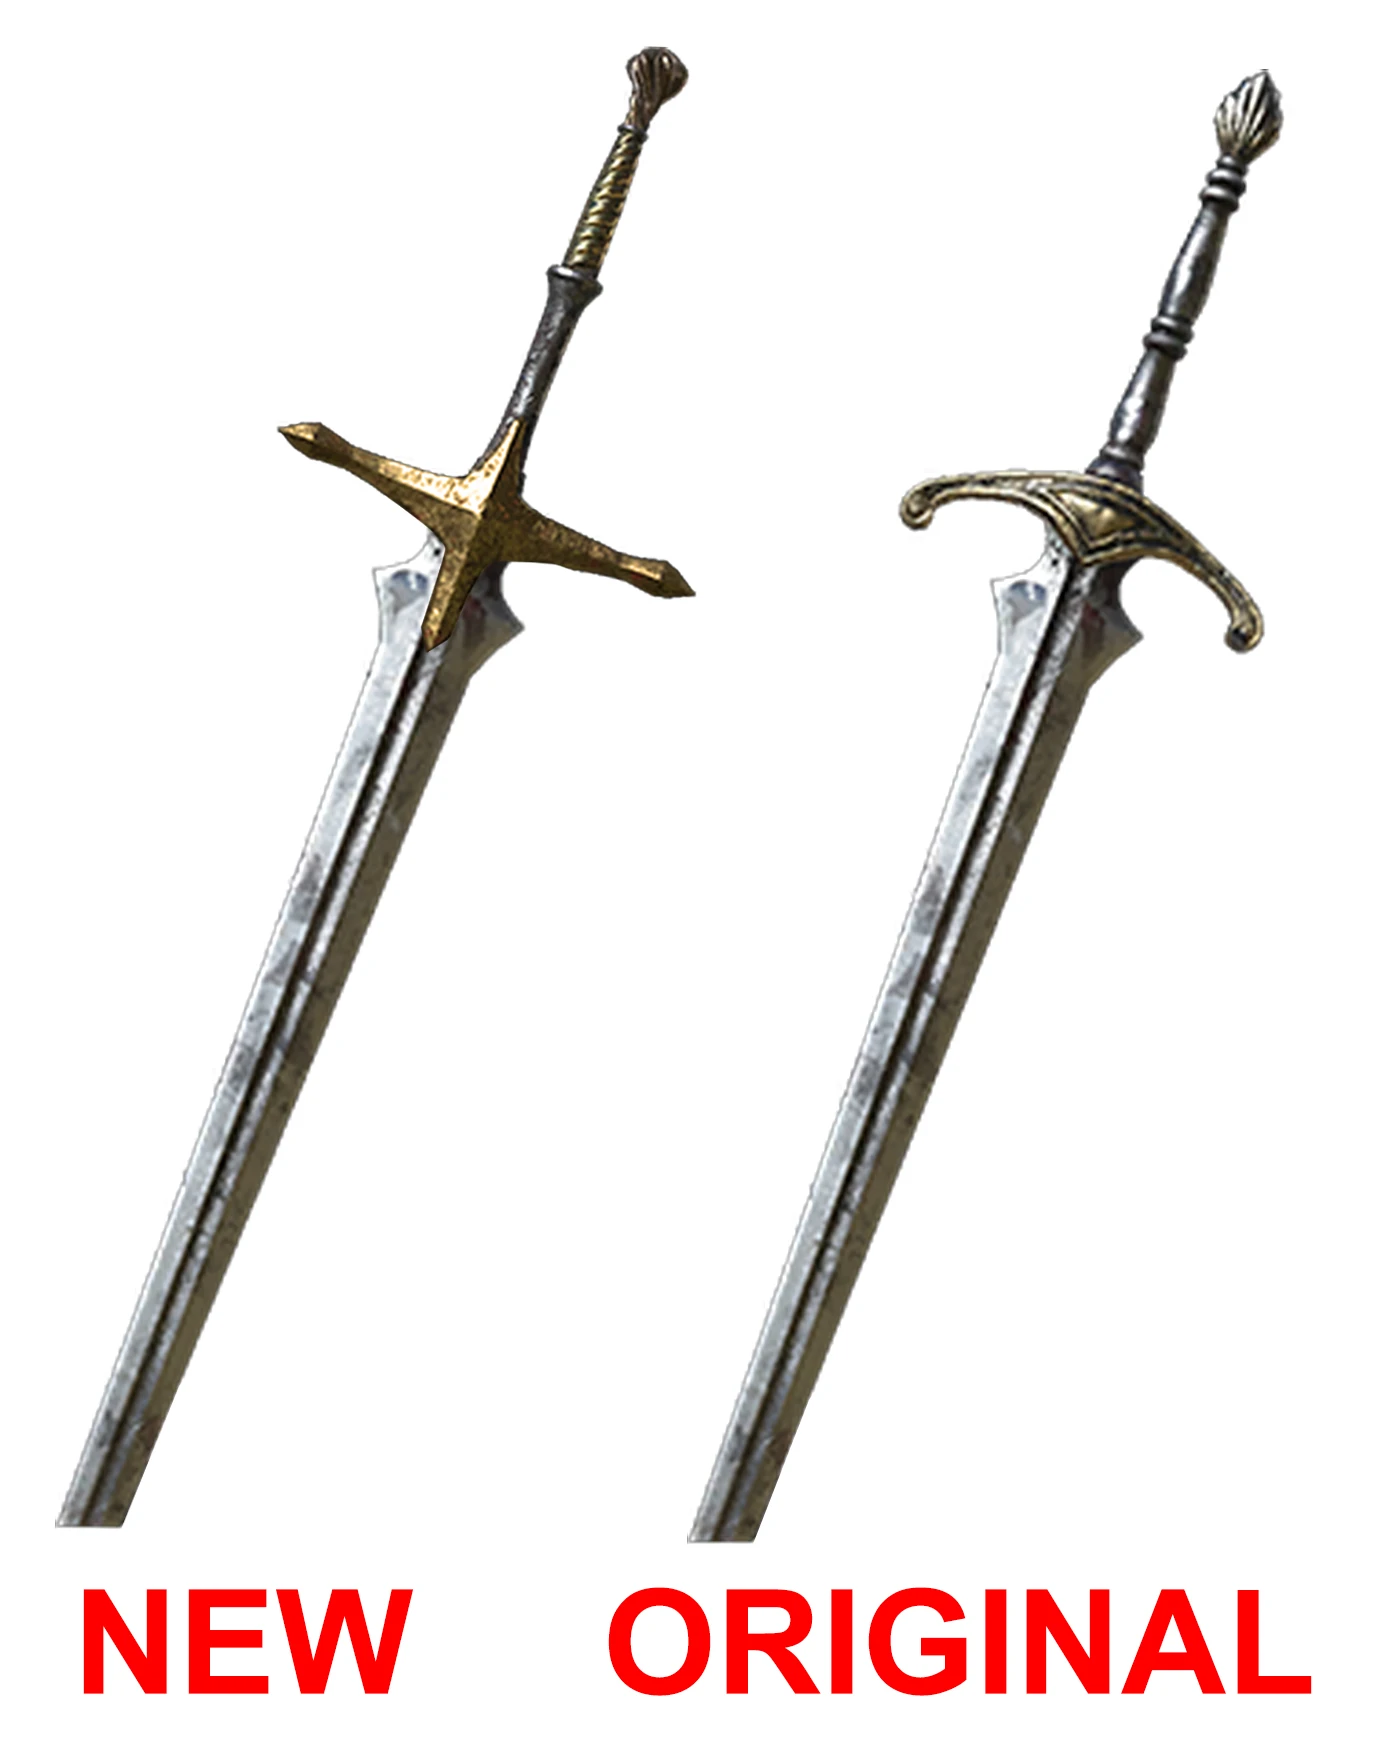 New Lothric Knight Straight Sword.